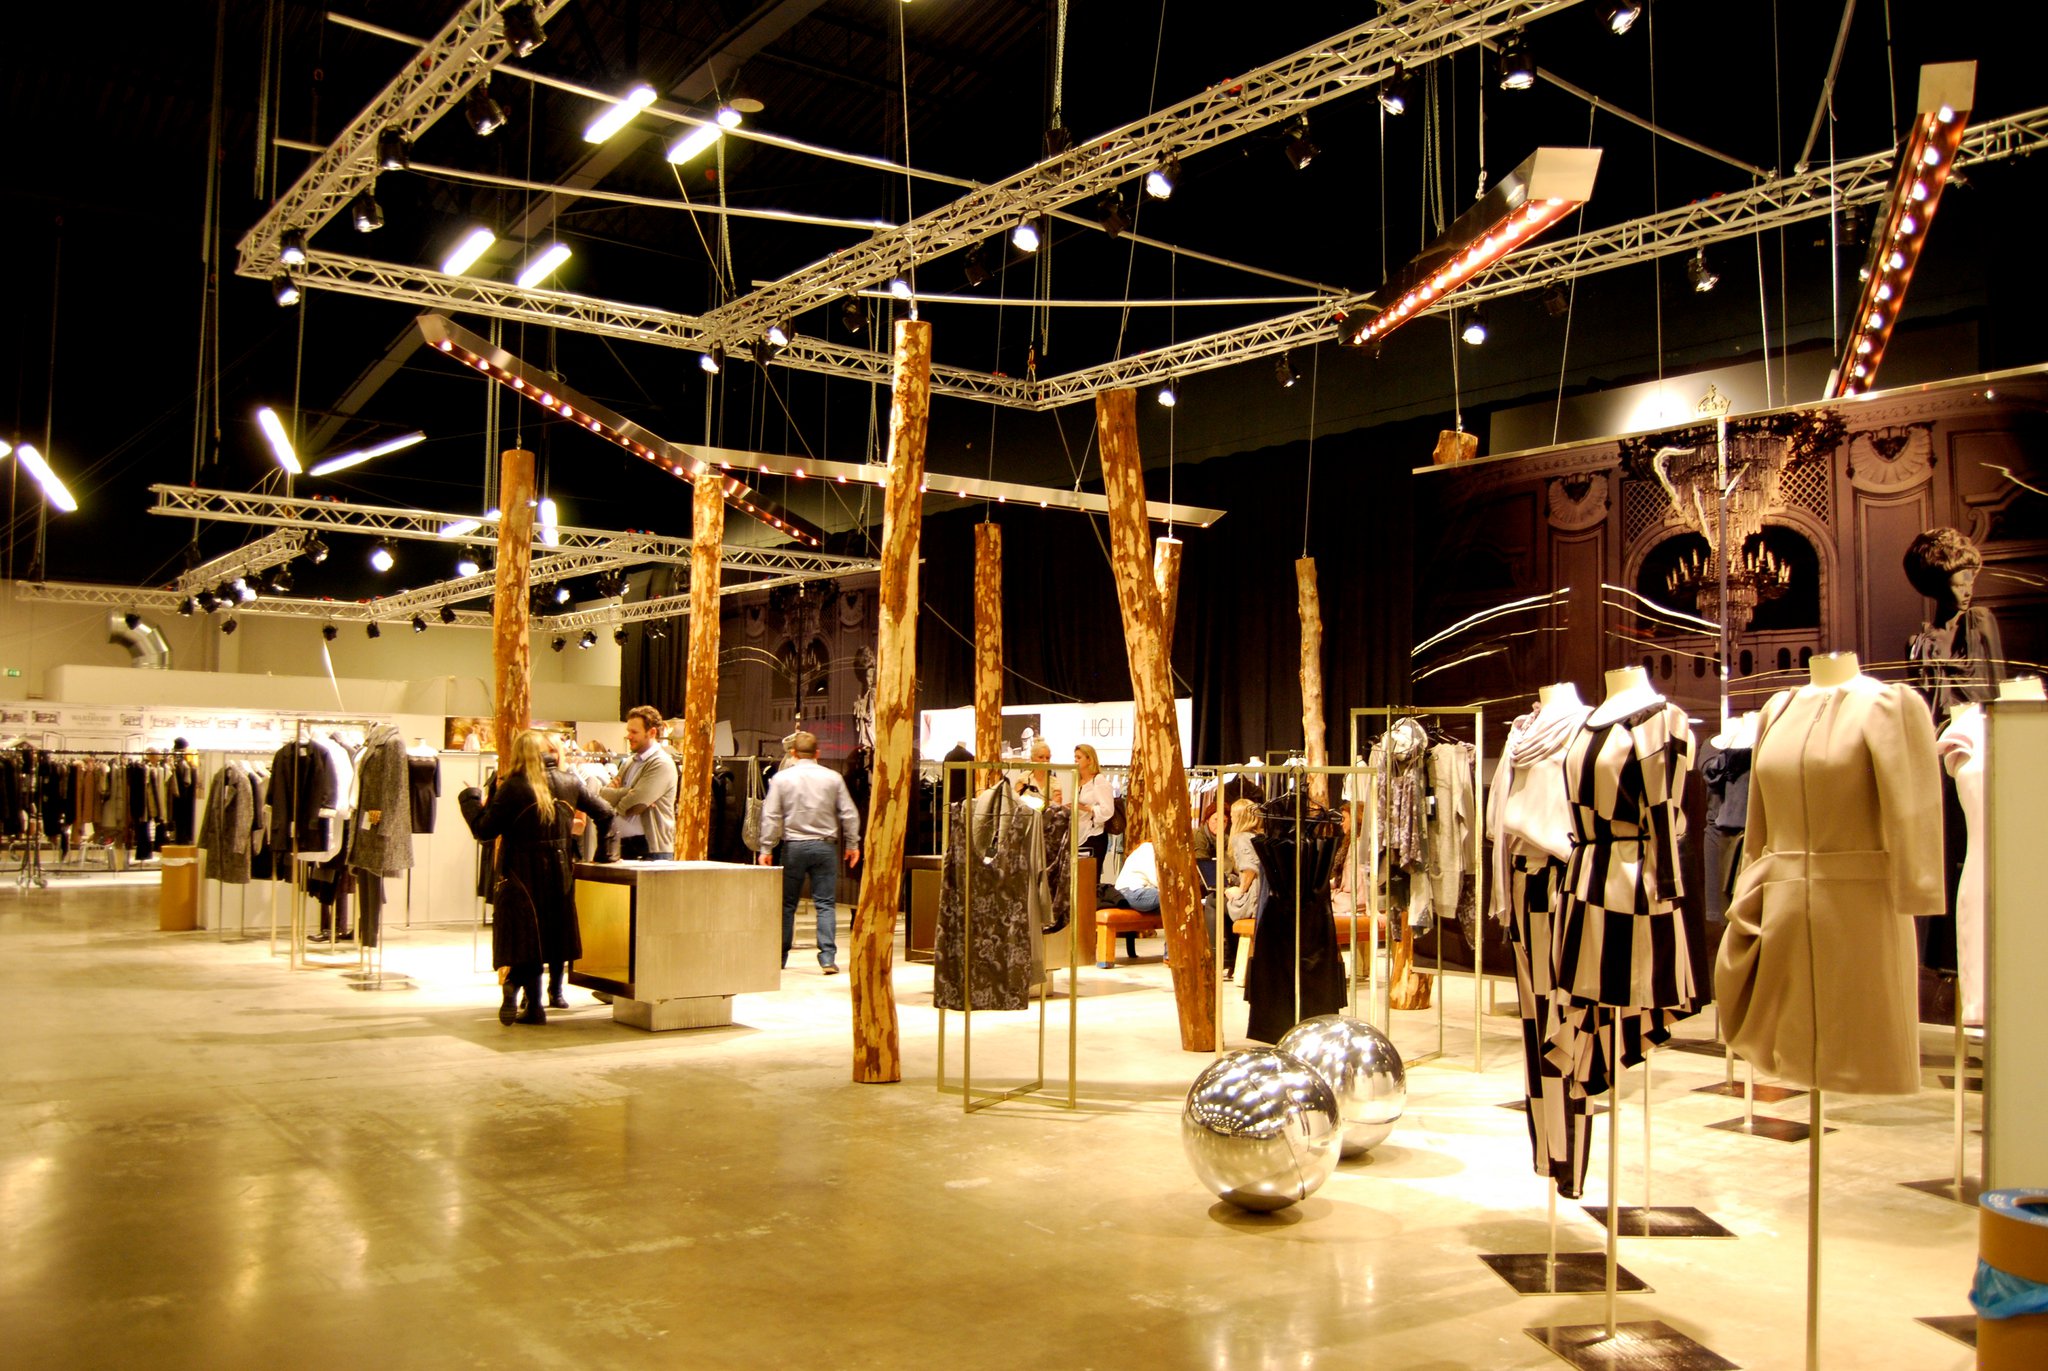 Gallery Fashion Fair in Copenhagen - 10150417424480341.jpg